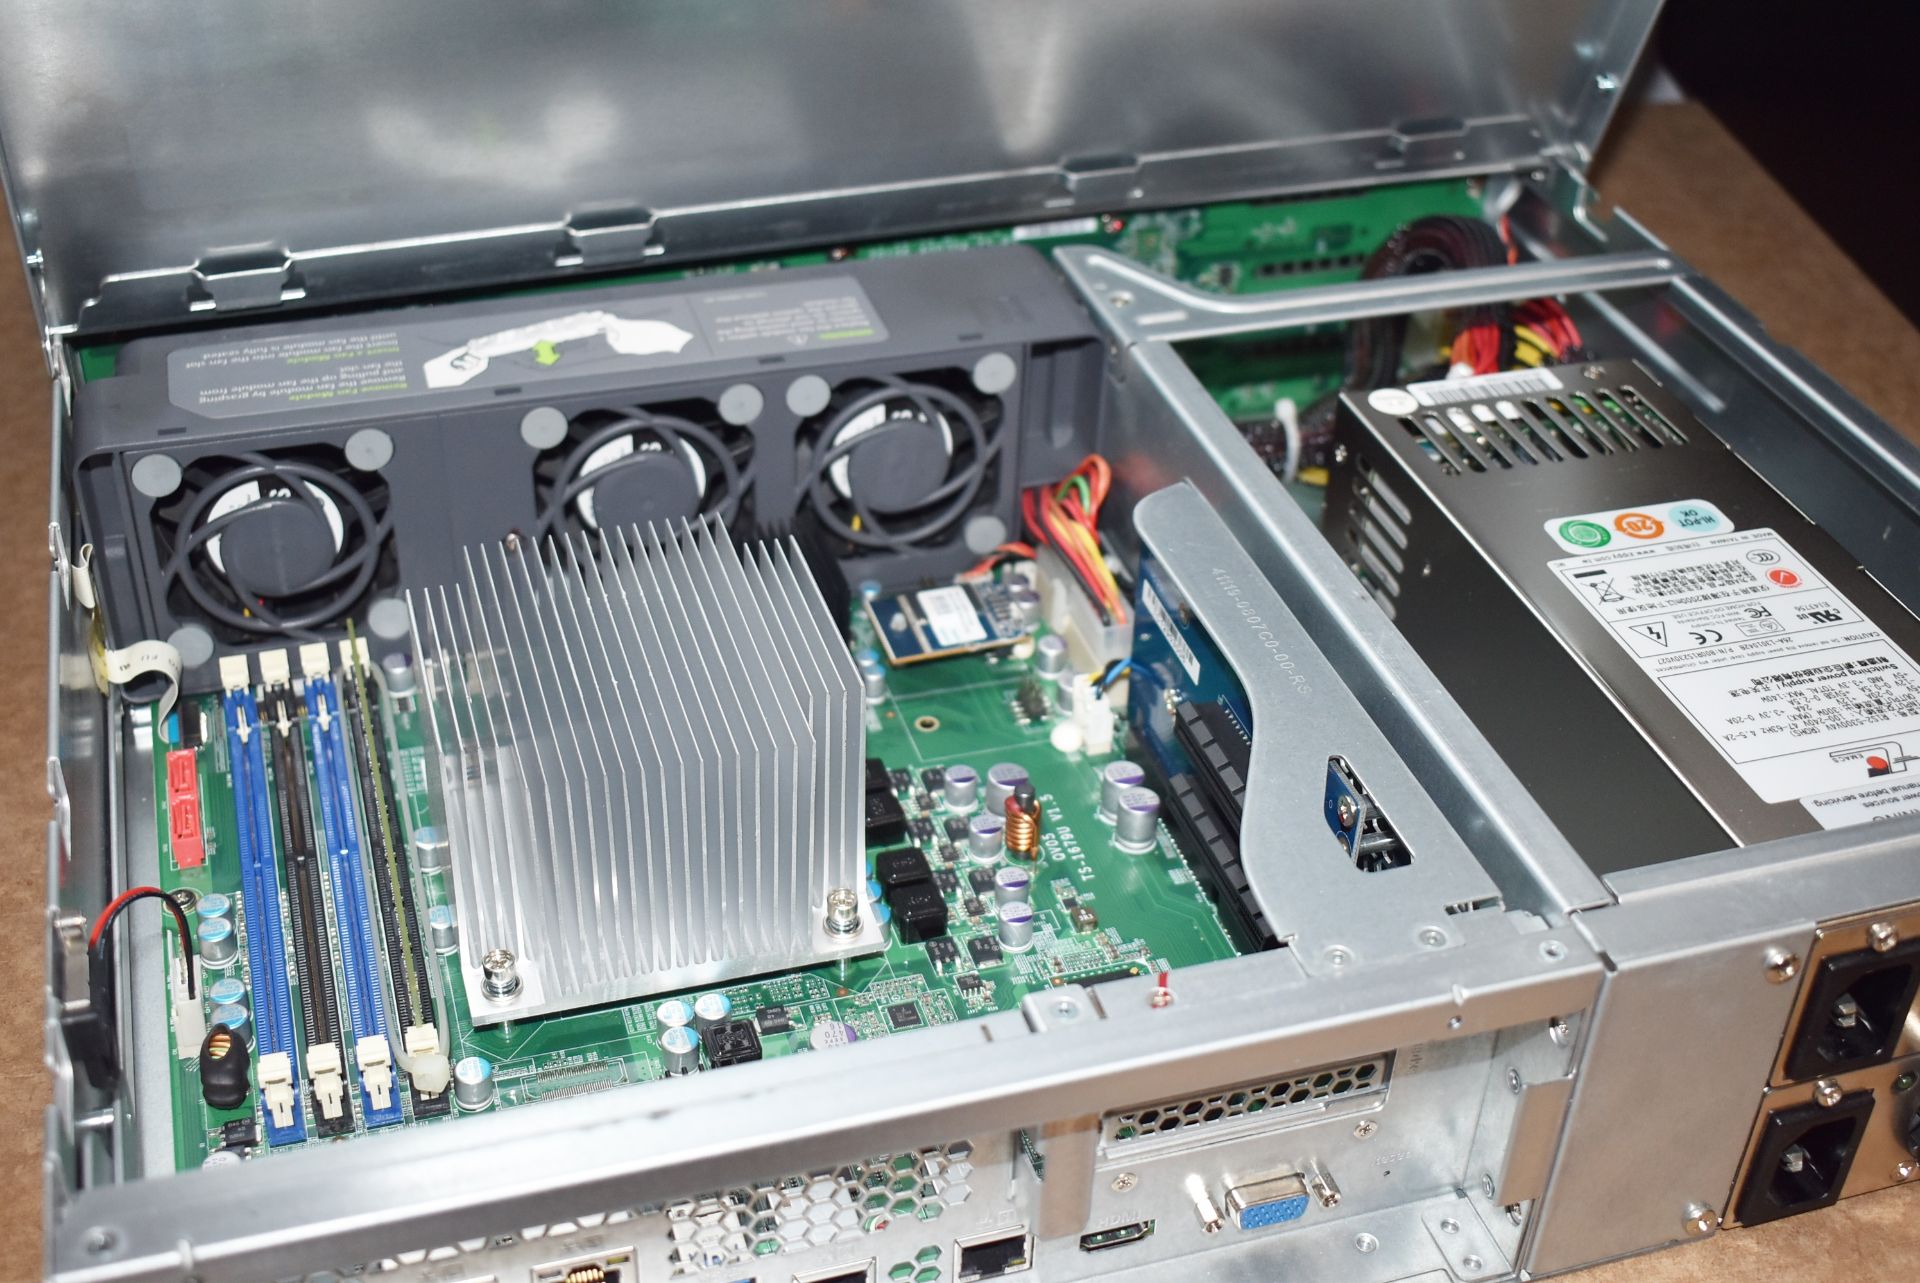 1 x QNAP 8 Bay 2u NAS Storage Device - Model TS-879U-RP - RRP £1,500 - Ref: MPC176 CA - CL678 - - Image 10 of 11